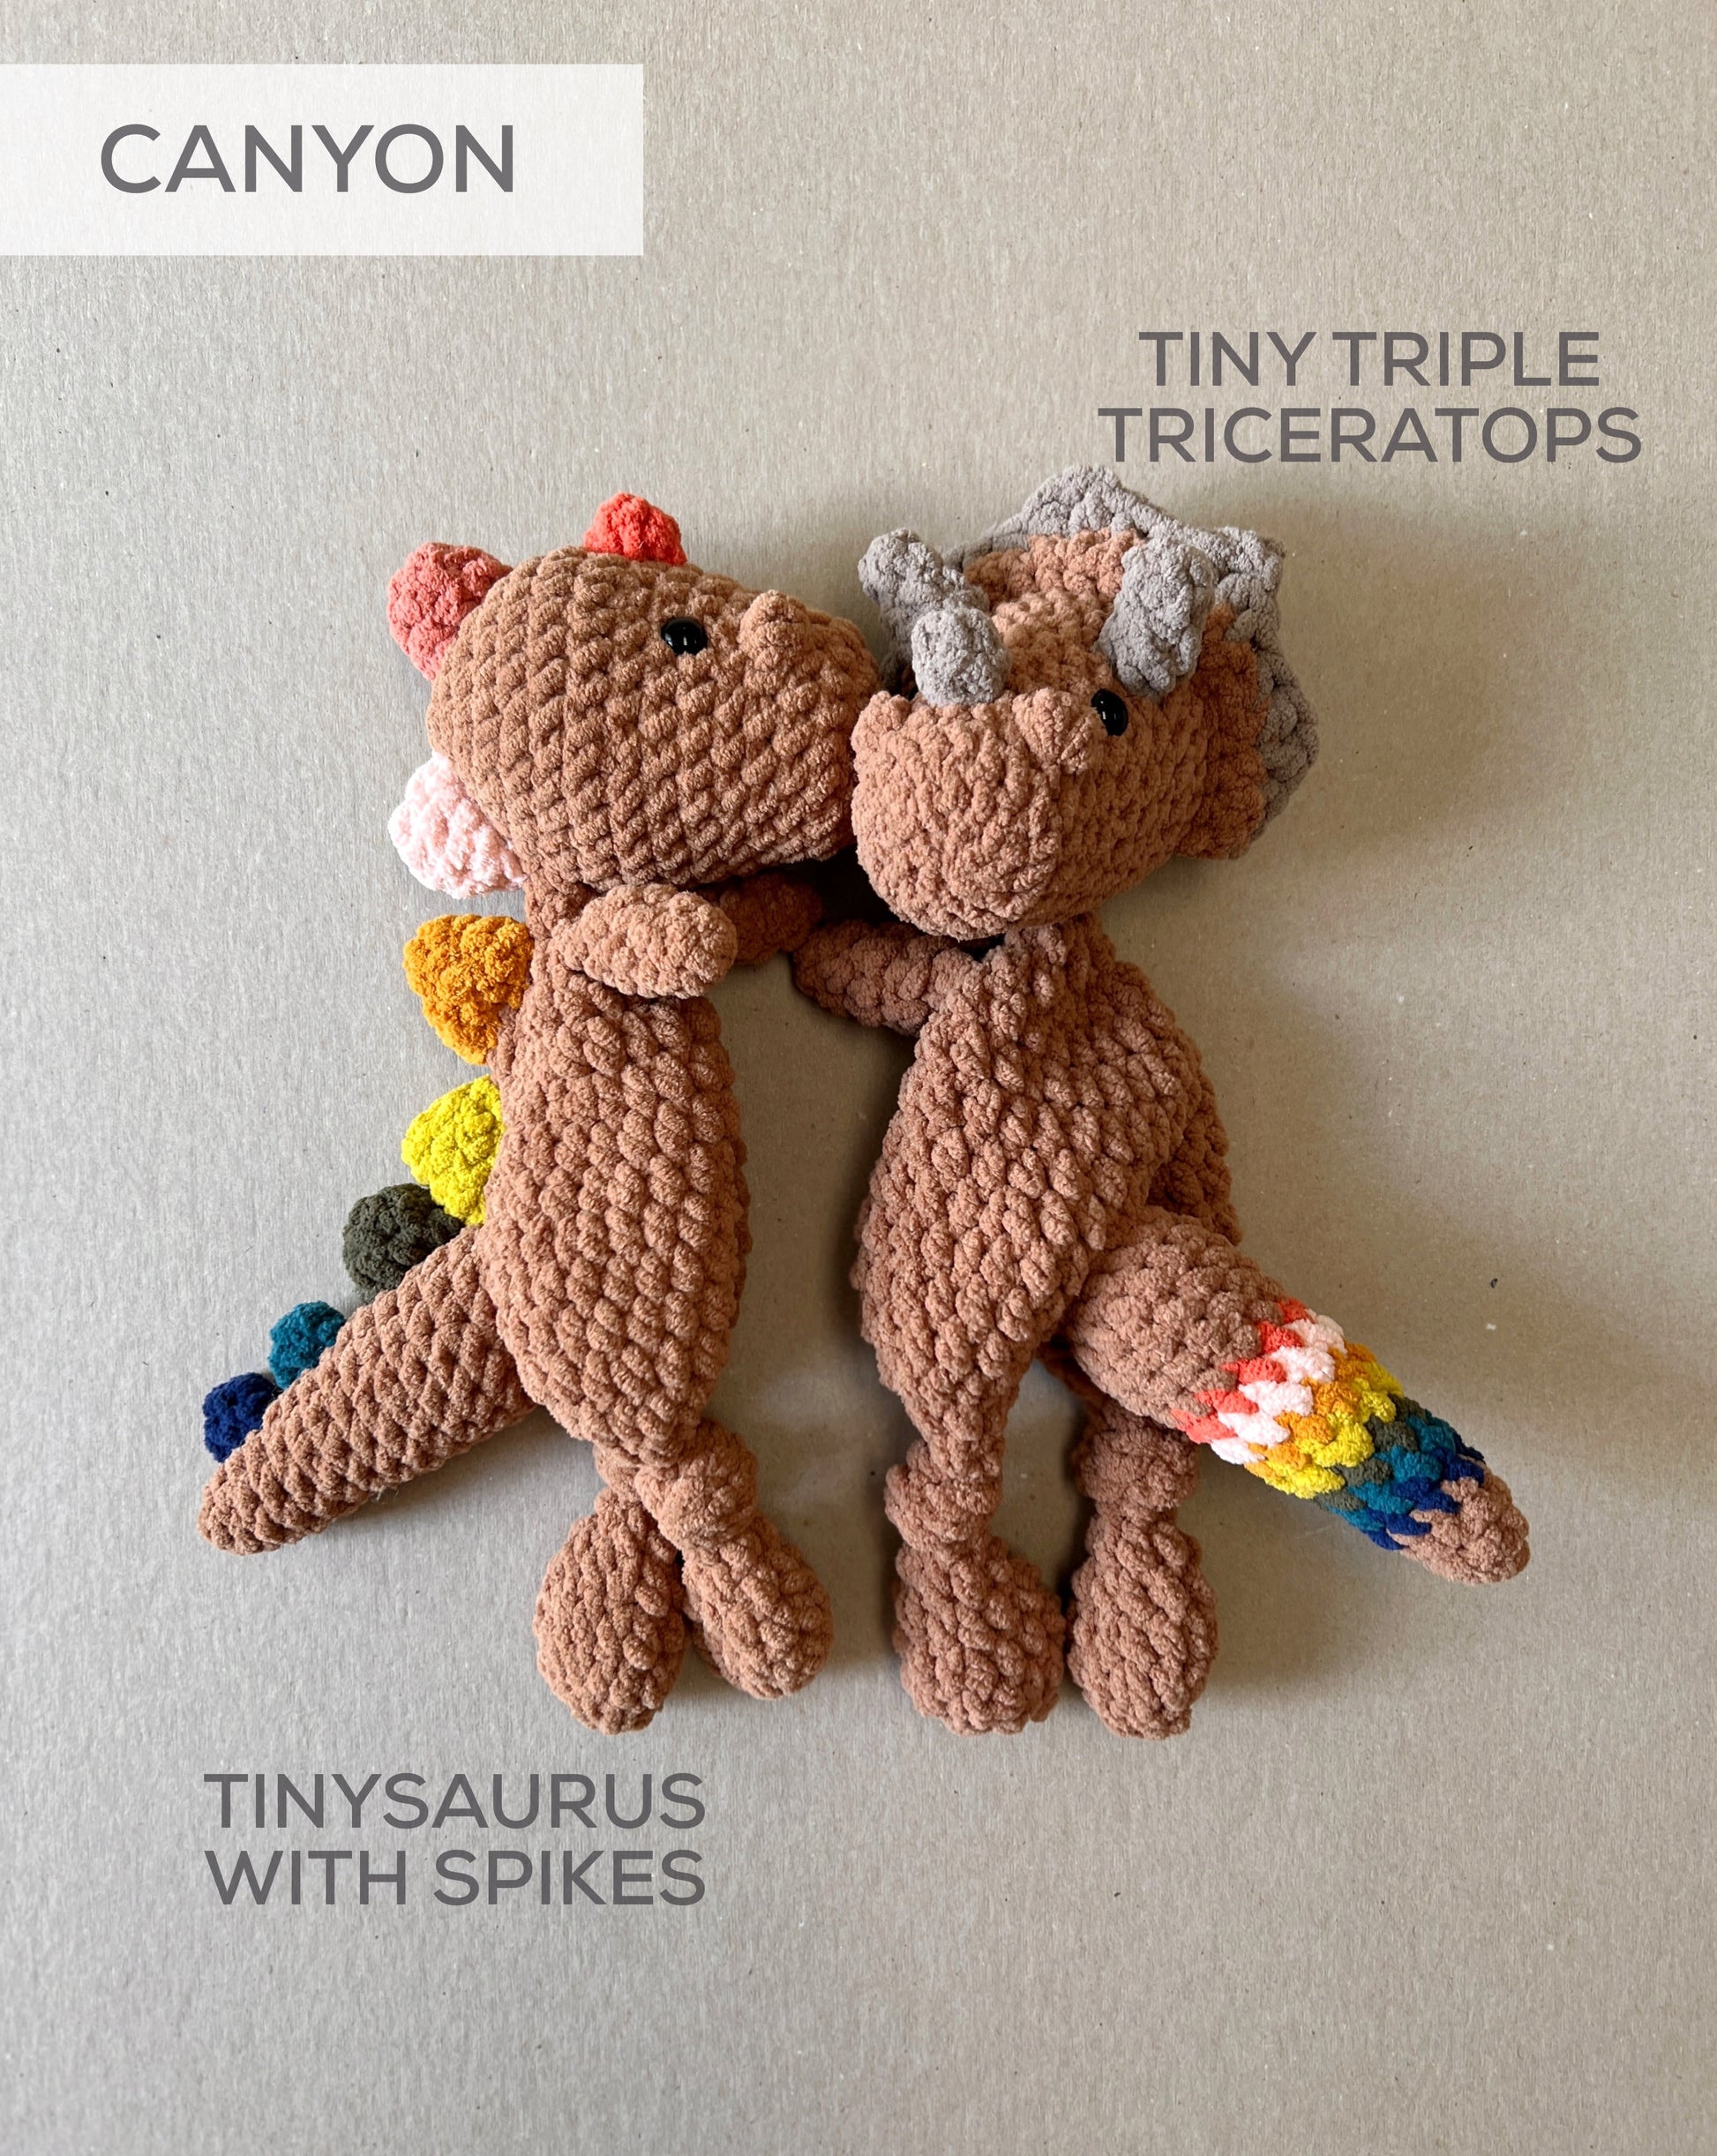 Triple Triceratops *Modifiction* for Bohasaurus + Tinysaurus – Mama Made  Minis